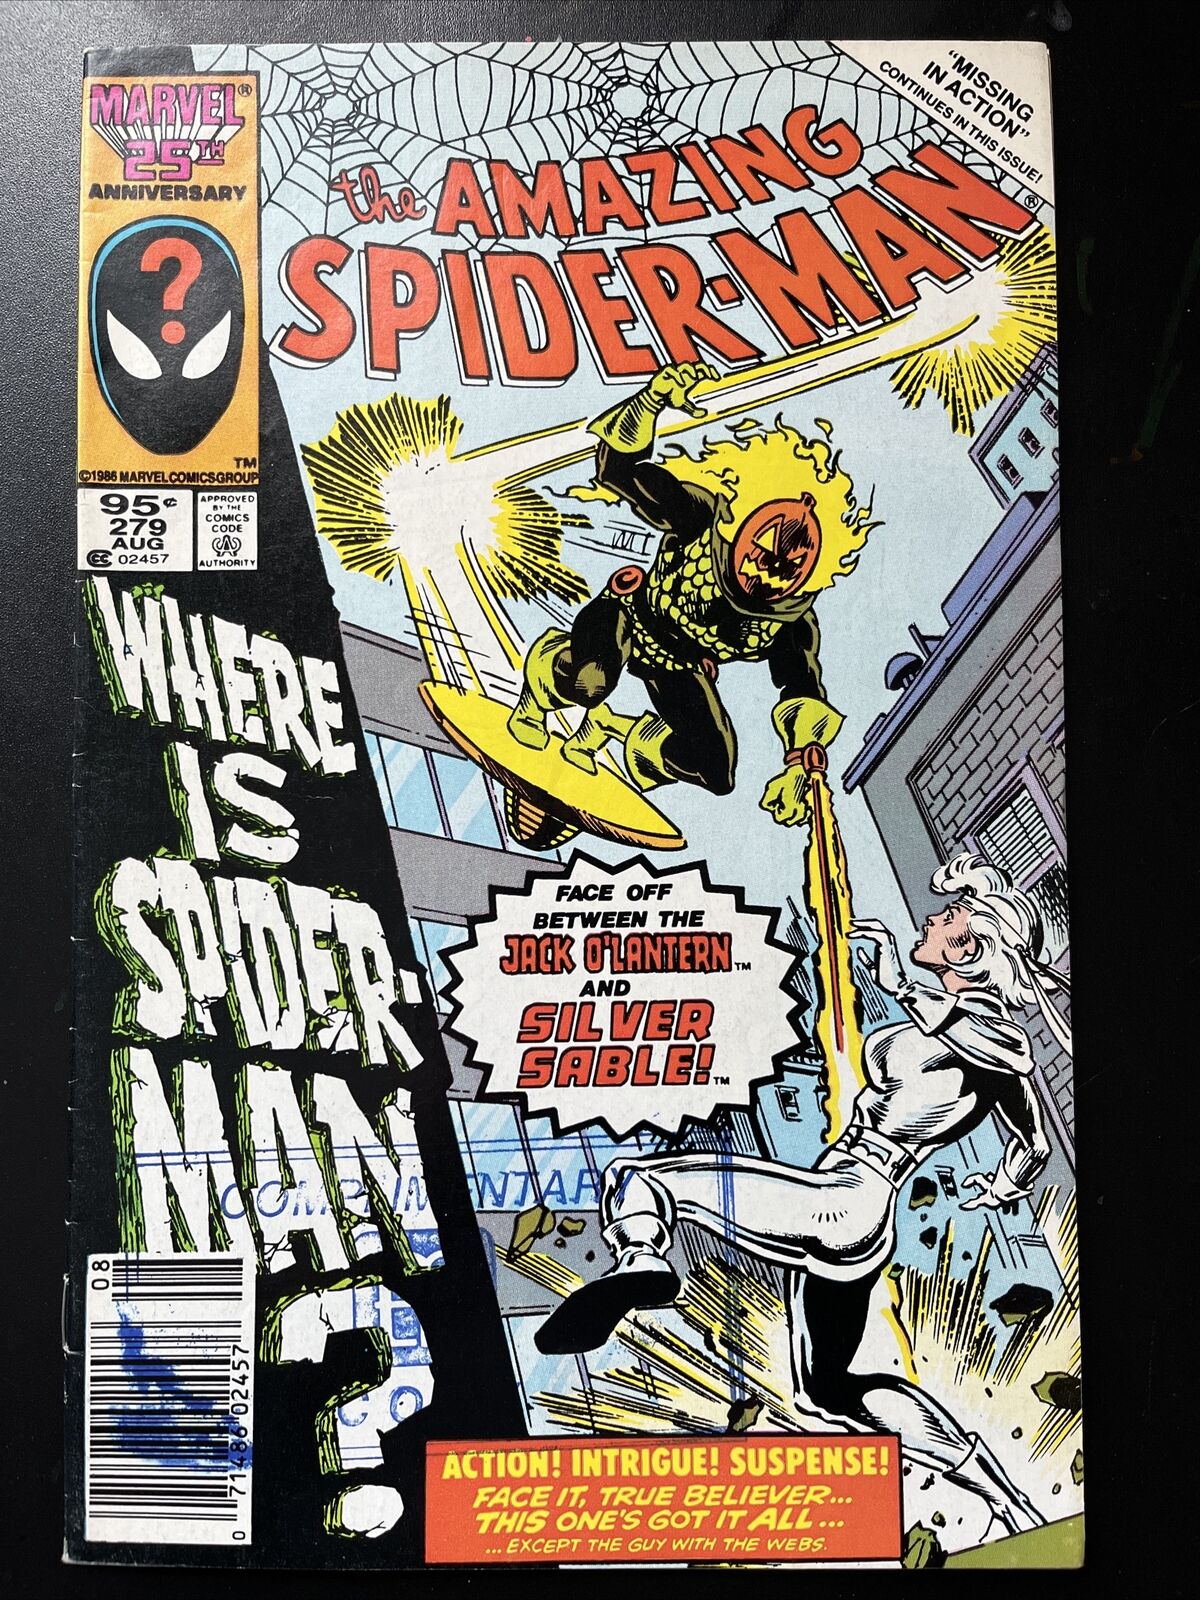 Amazing Spider-man 279 Marvel Comics 95¢ Canadian Price Variant LOW-MID GRADE - aliencomics.ca